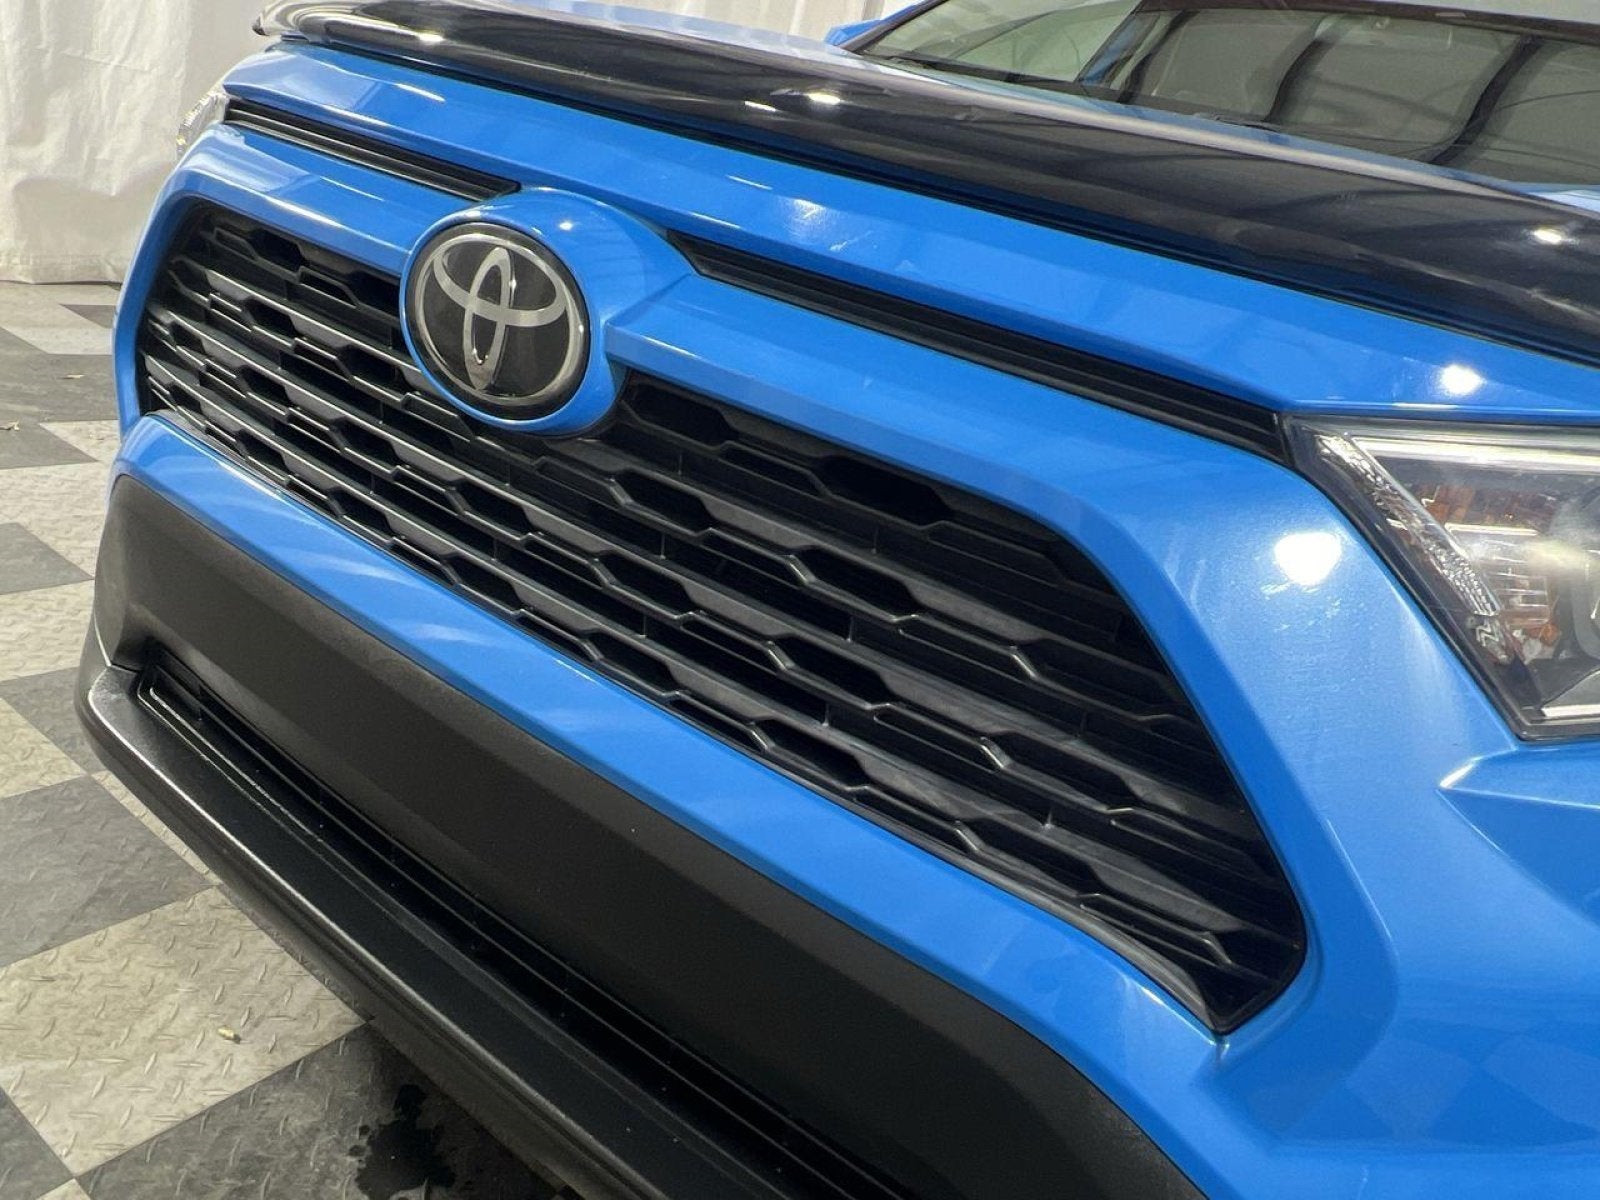 2019 Toyota RAV4 XLE Premium